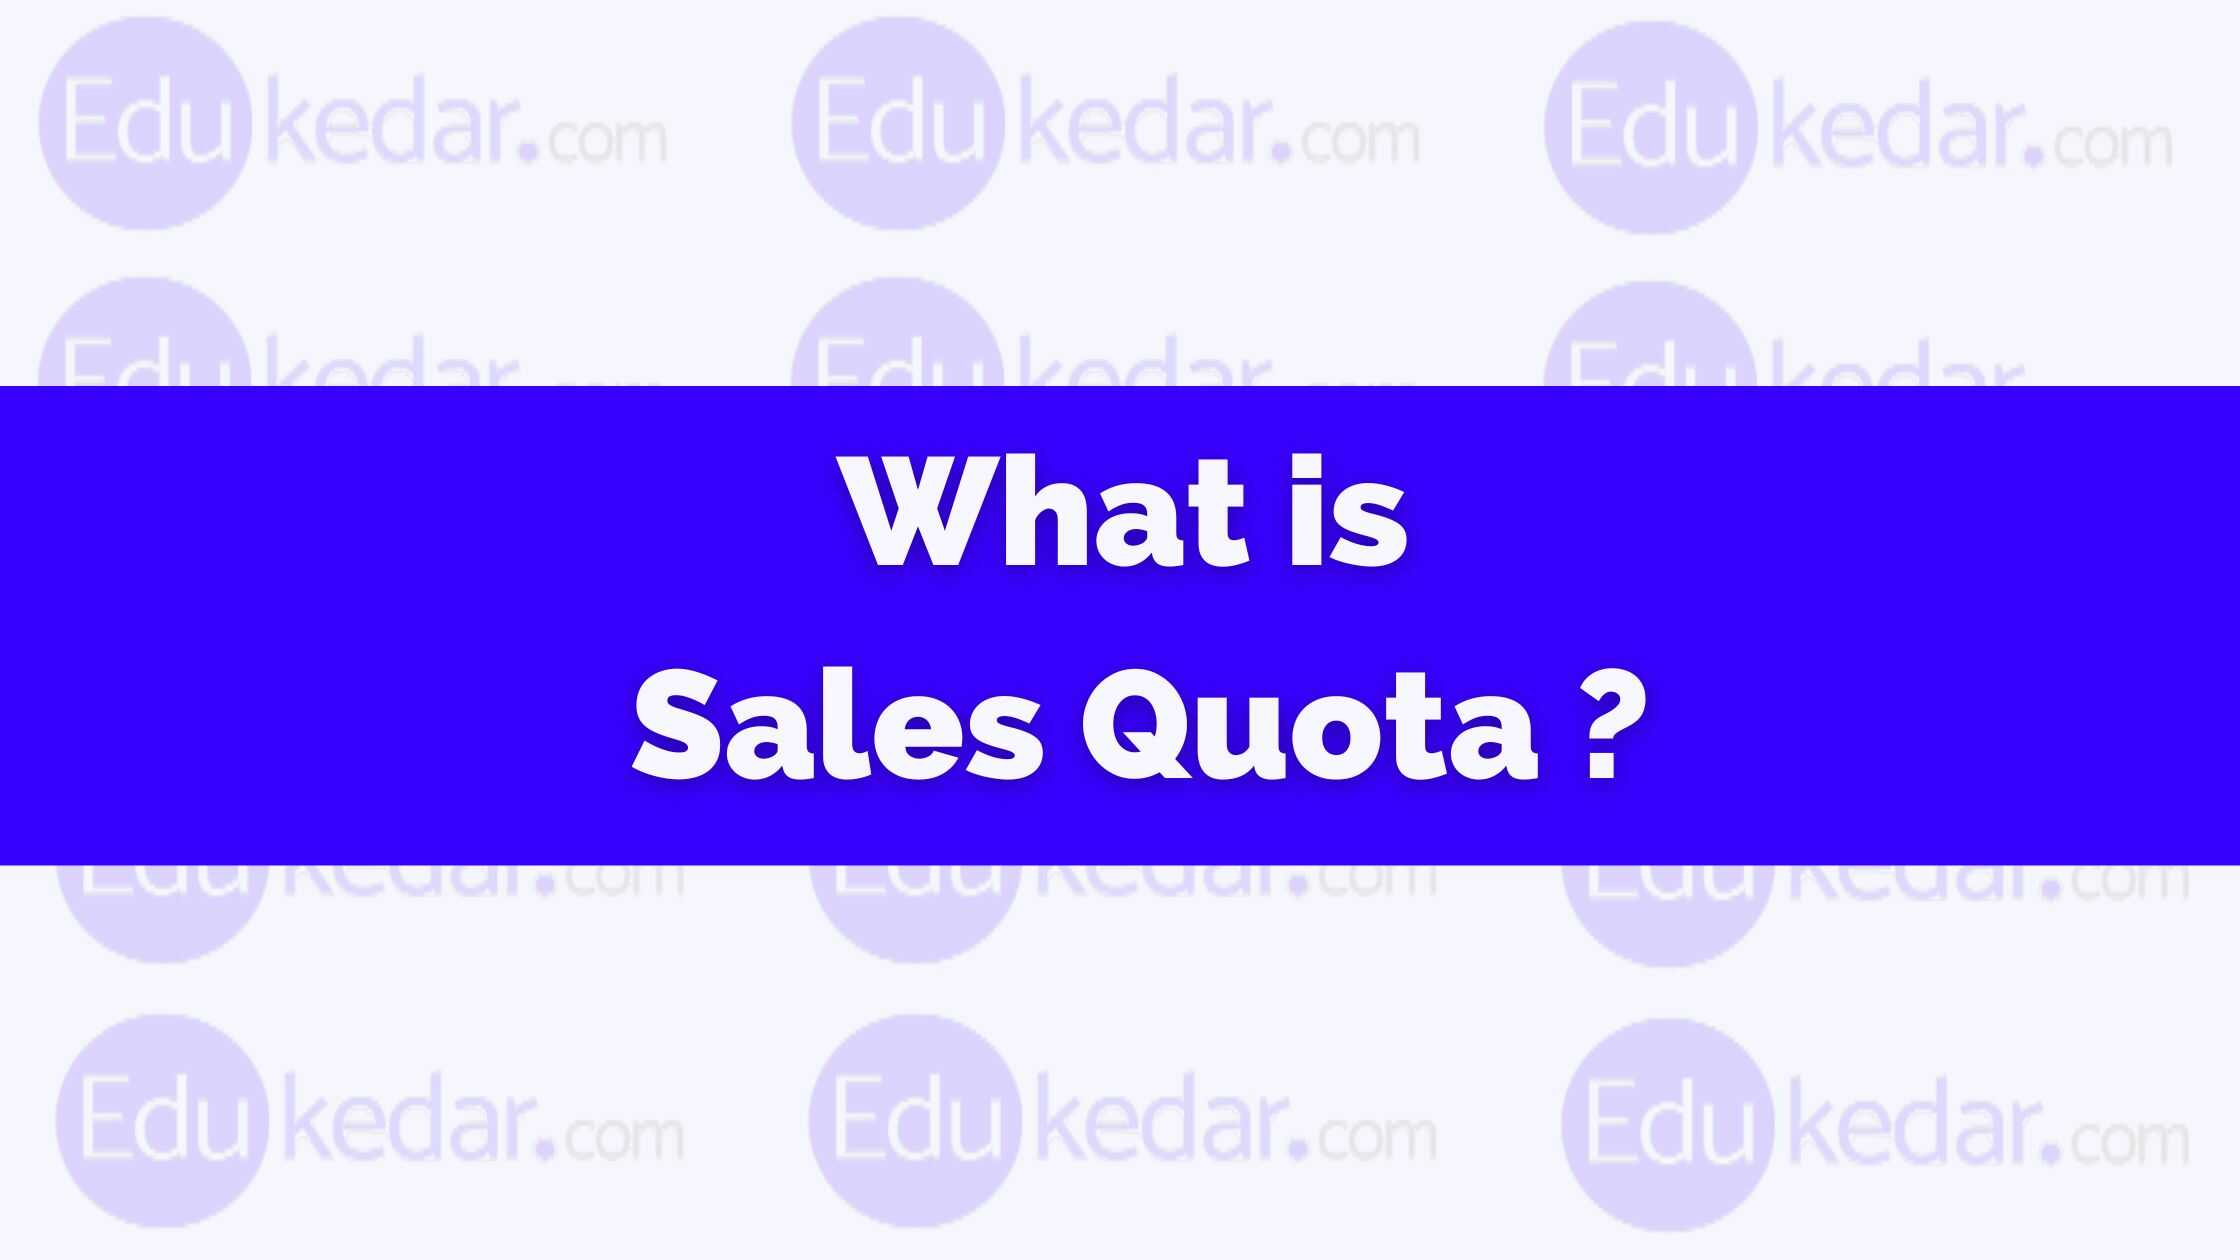 sales territories and quotas